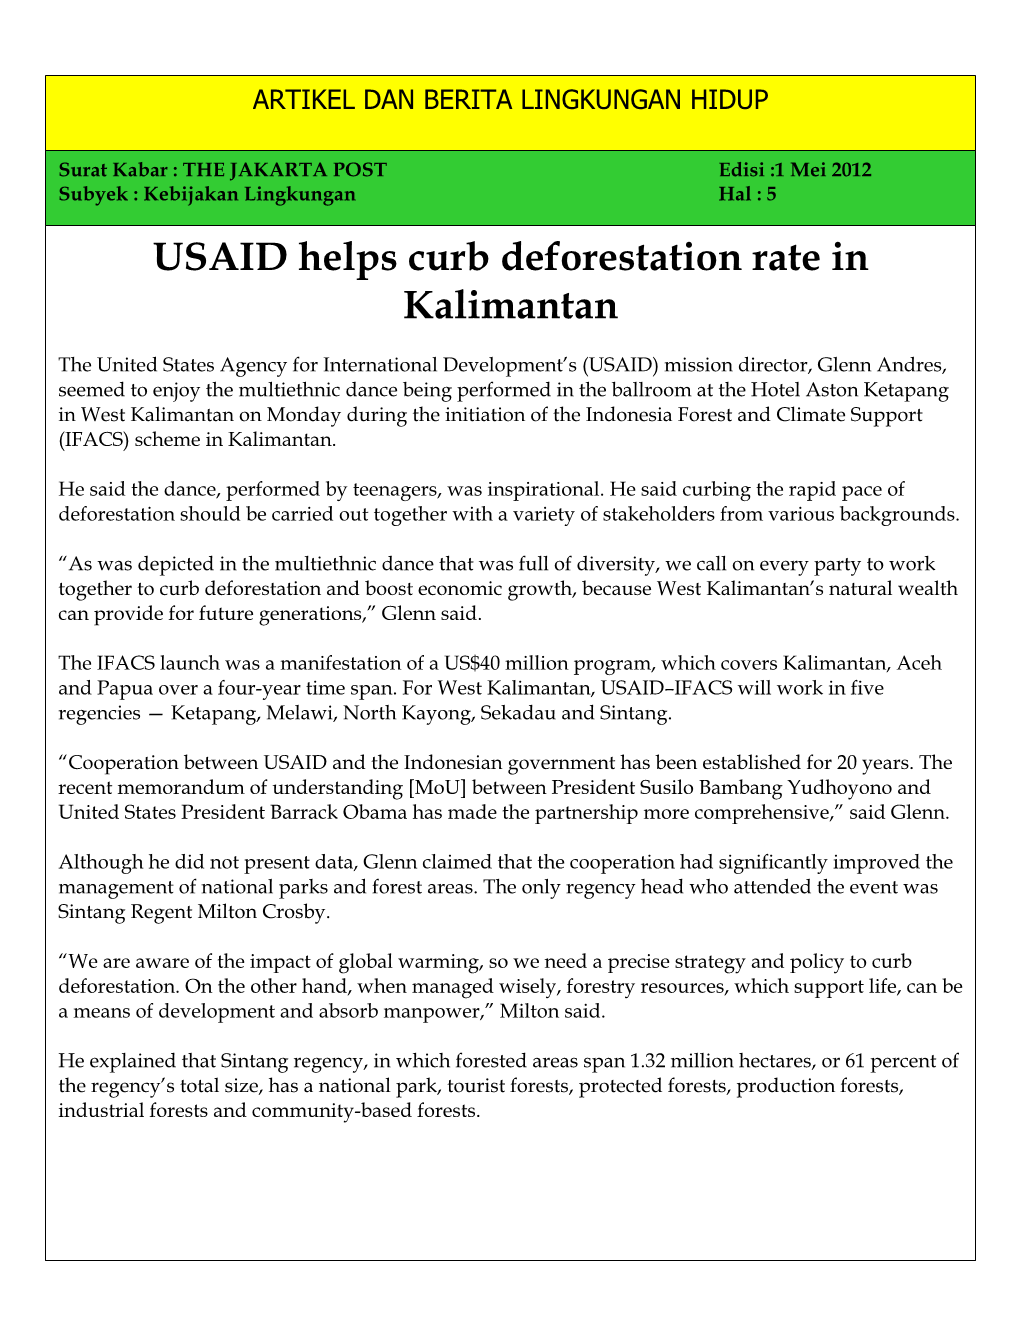 USAID Helps Curb Deforestation Rate in Kalimantan